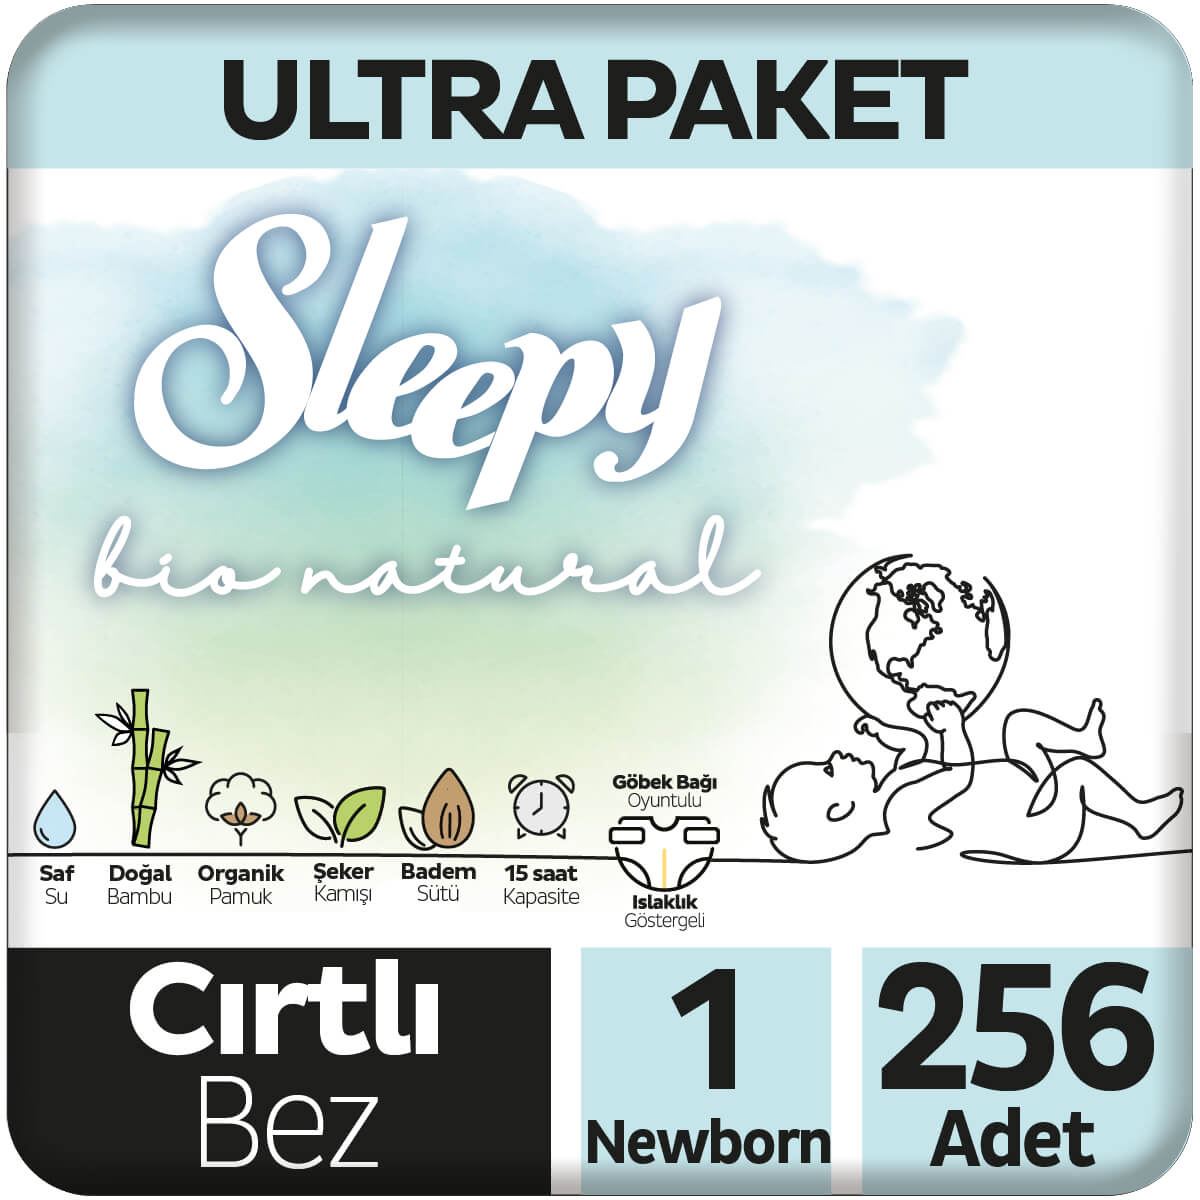 Sleepy Bio Natural Ultra Paket Bebek Bezi 1 Numara Yenidoğan 256 Adet